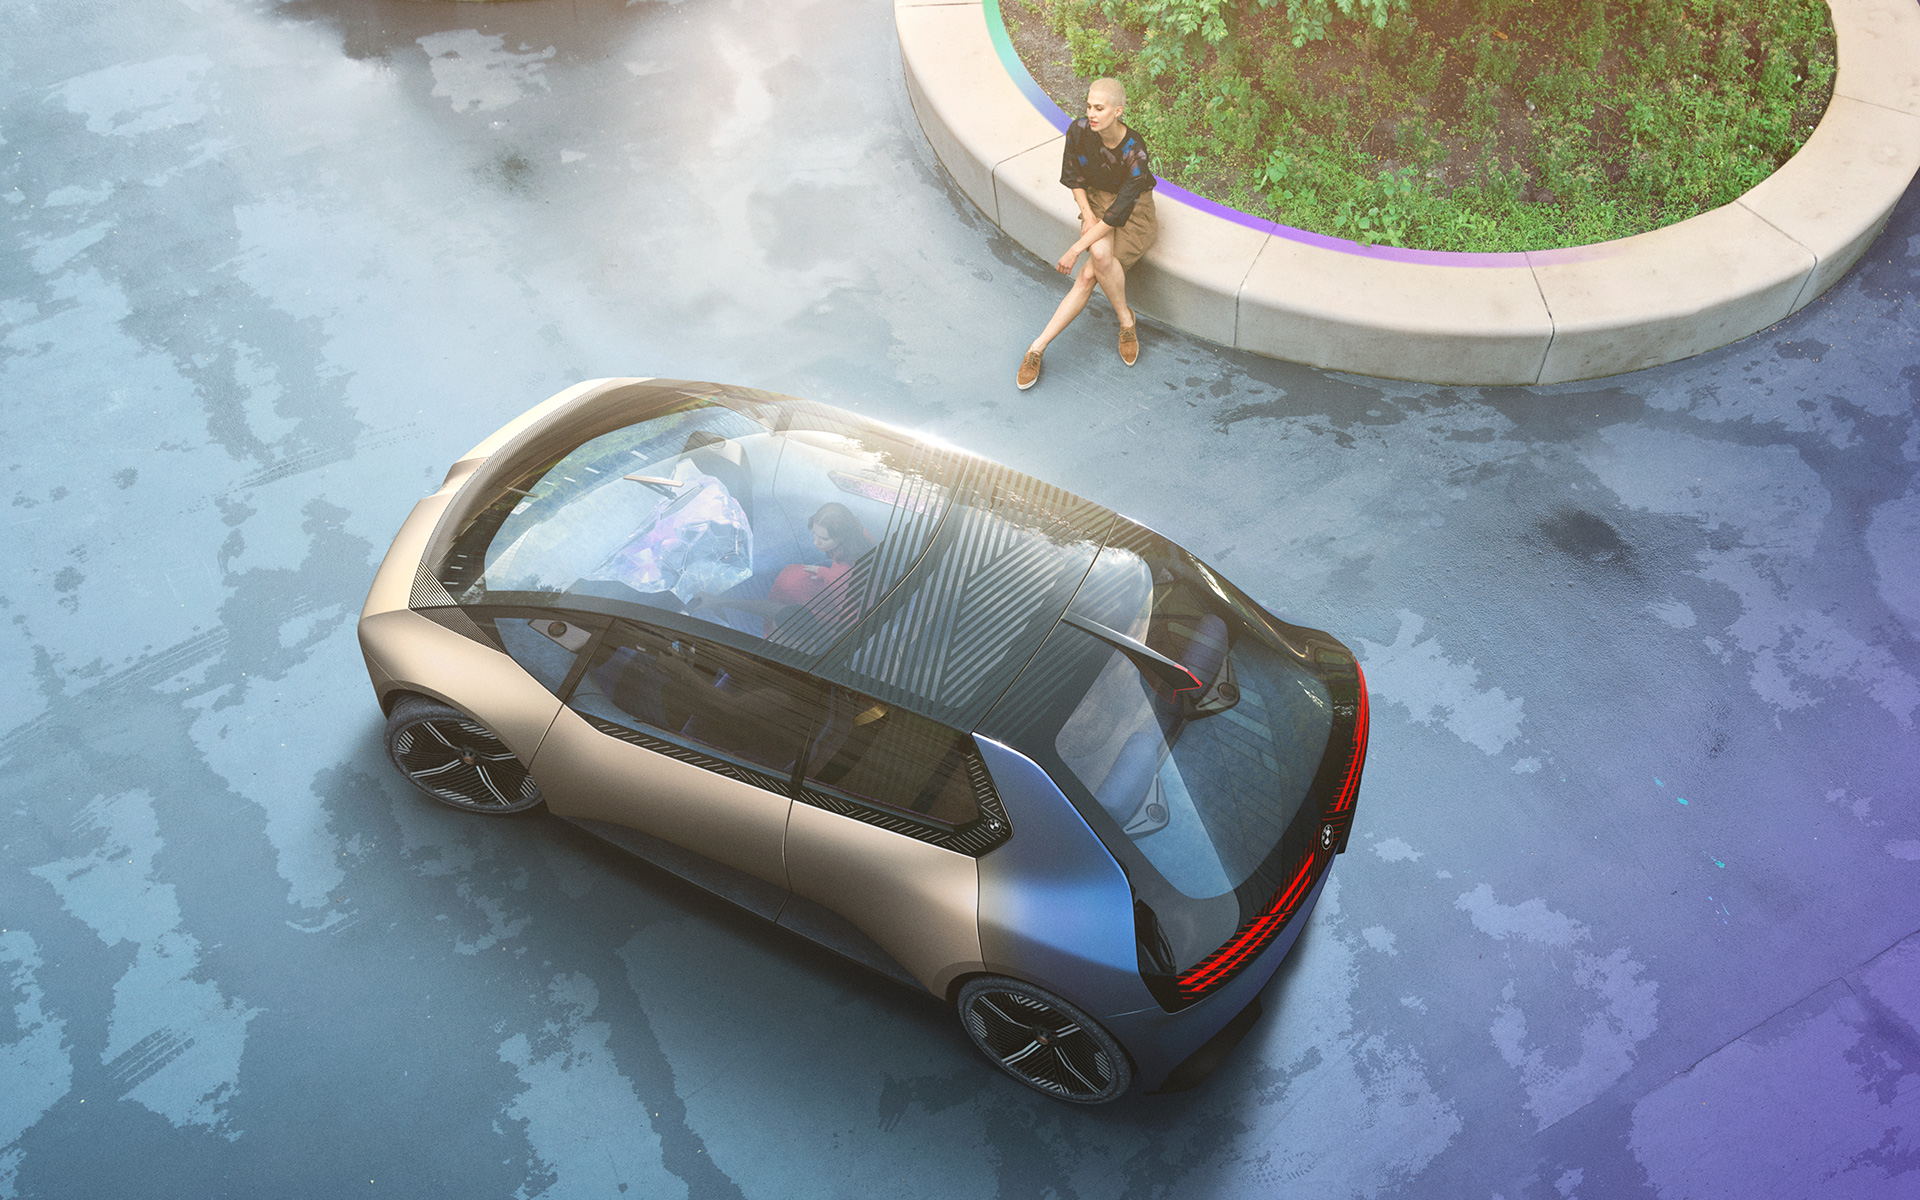 BMW i Vision Circular 2021 vision car impression 2